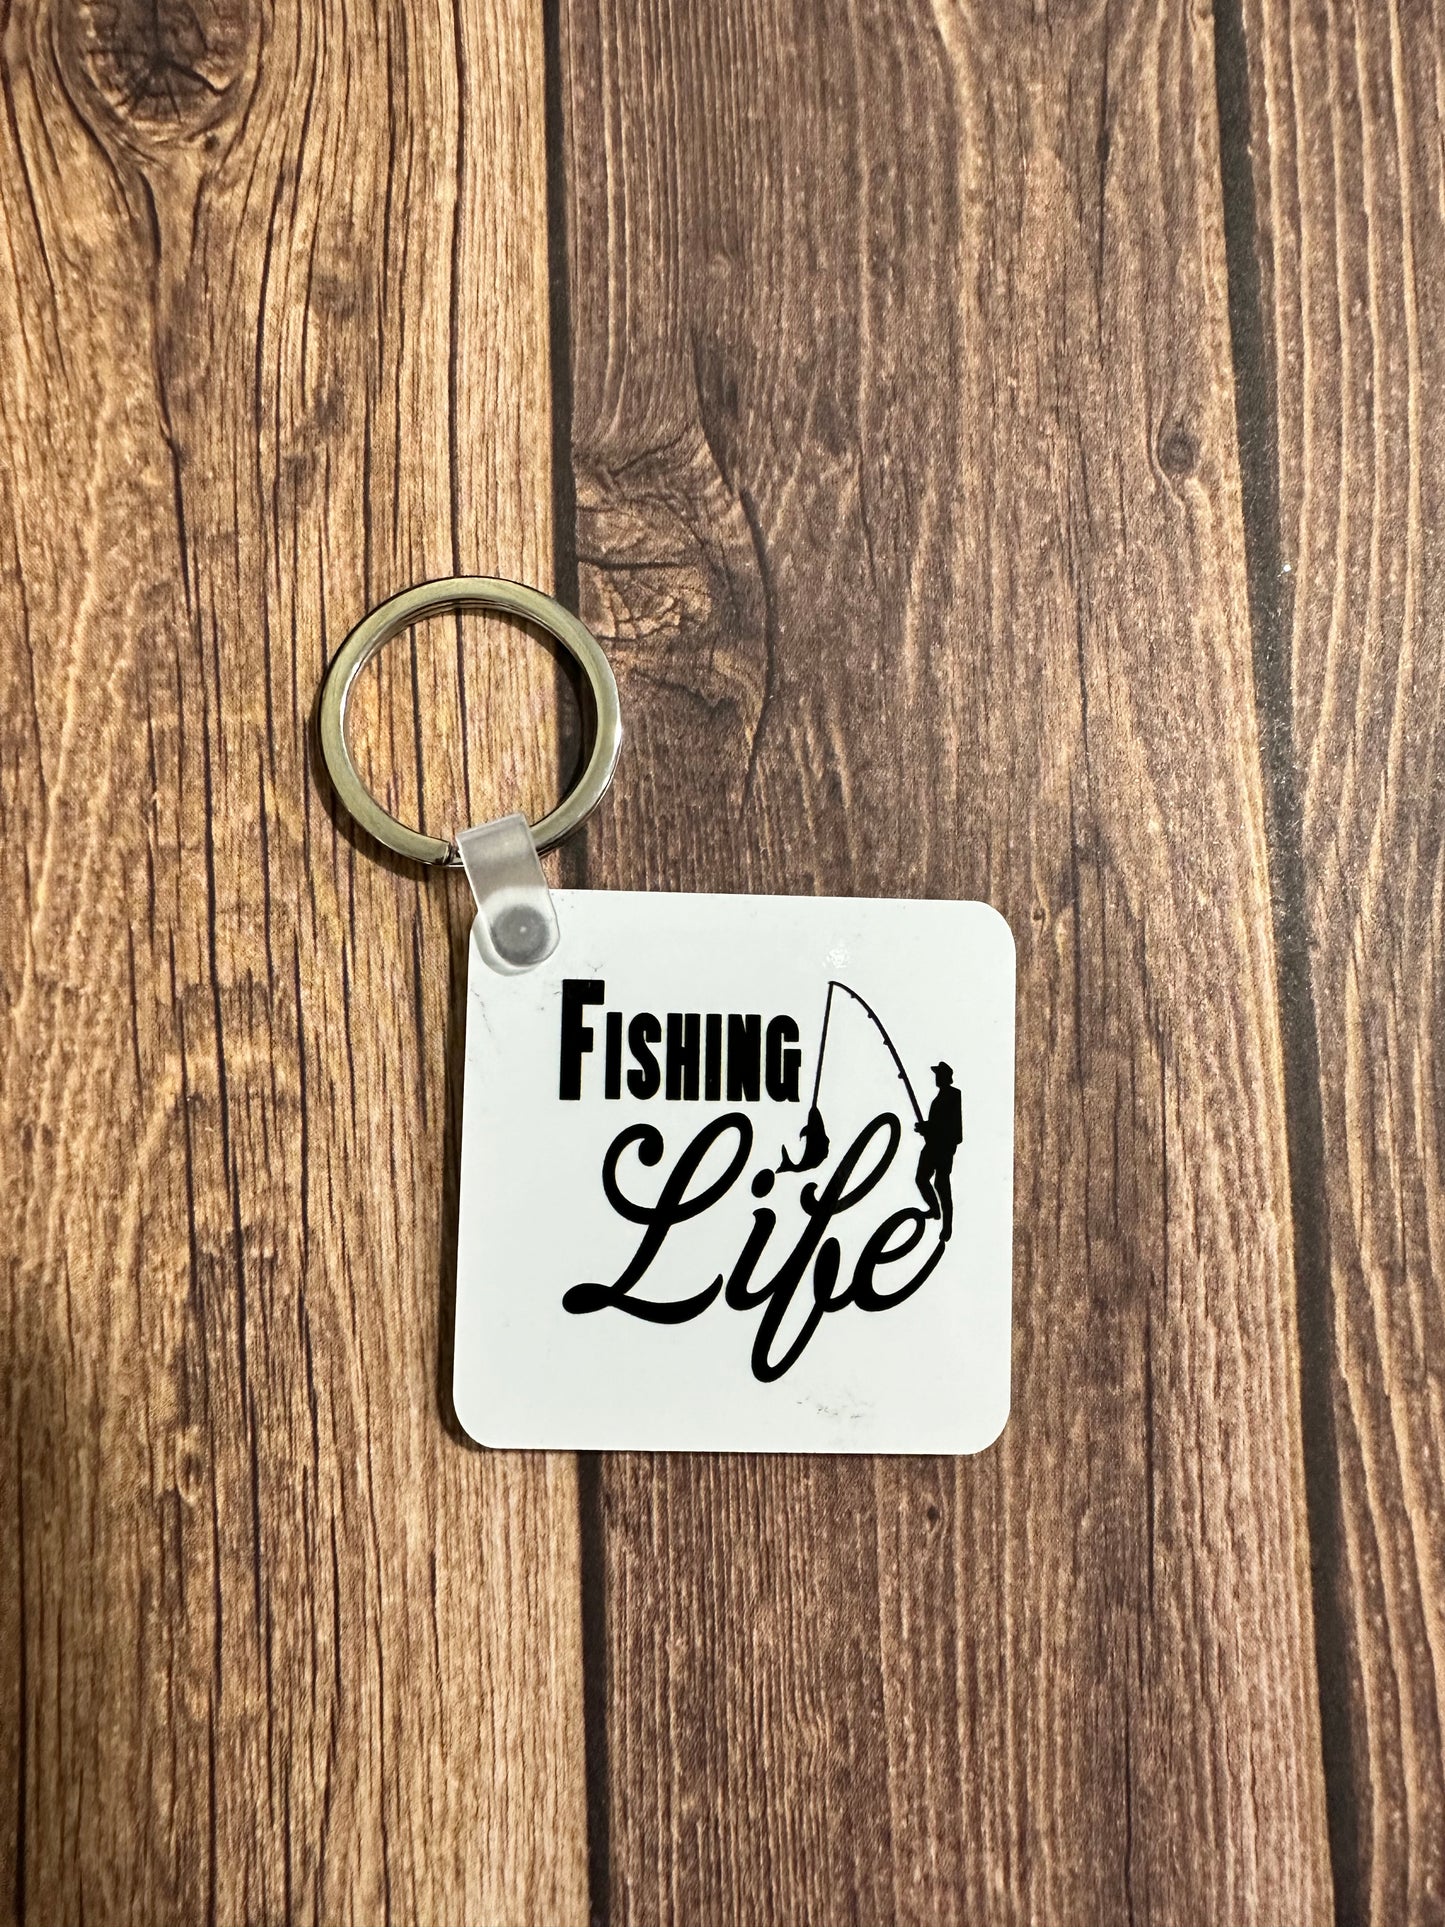 Fishing life keychain